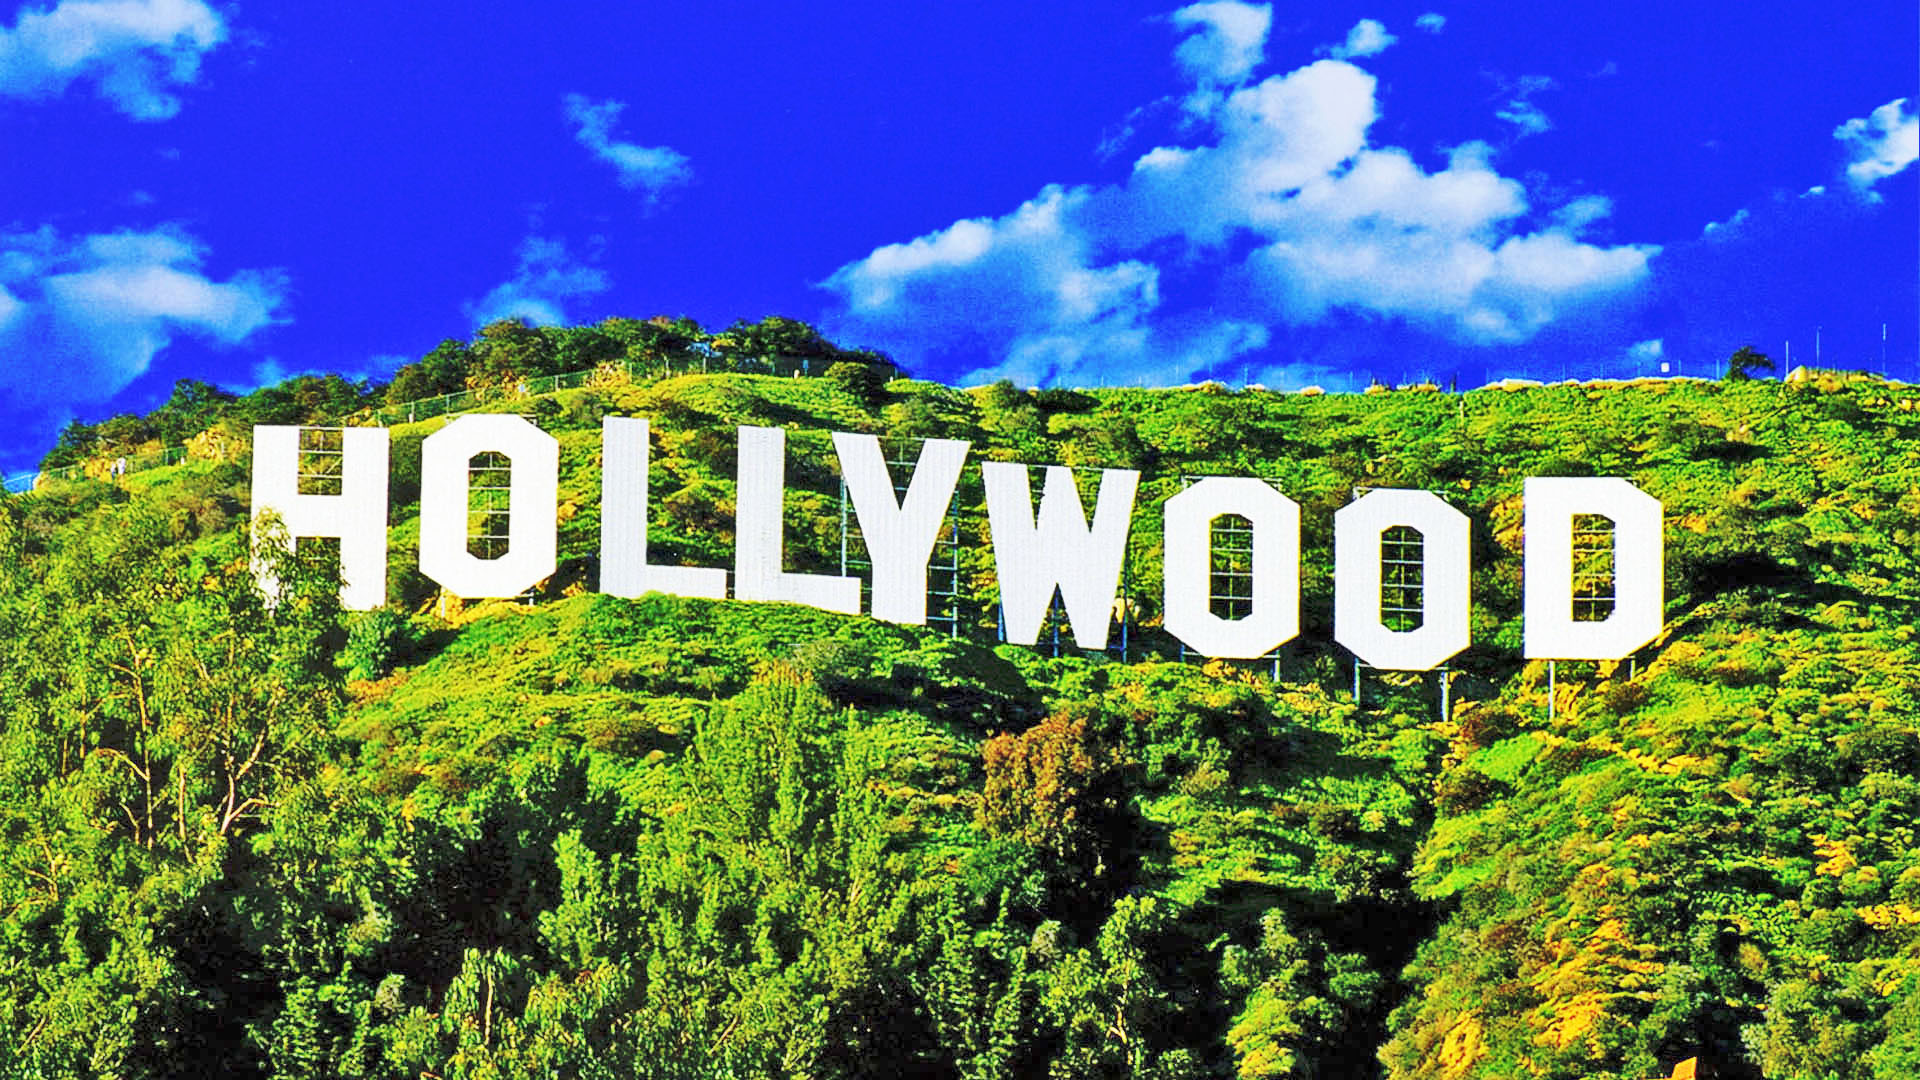 Hollywood Sign - HD Wallpaper 